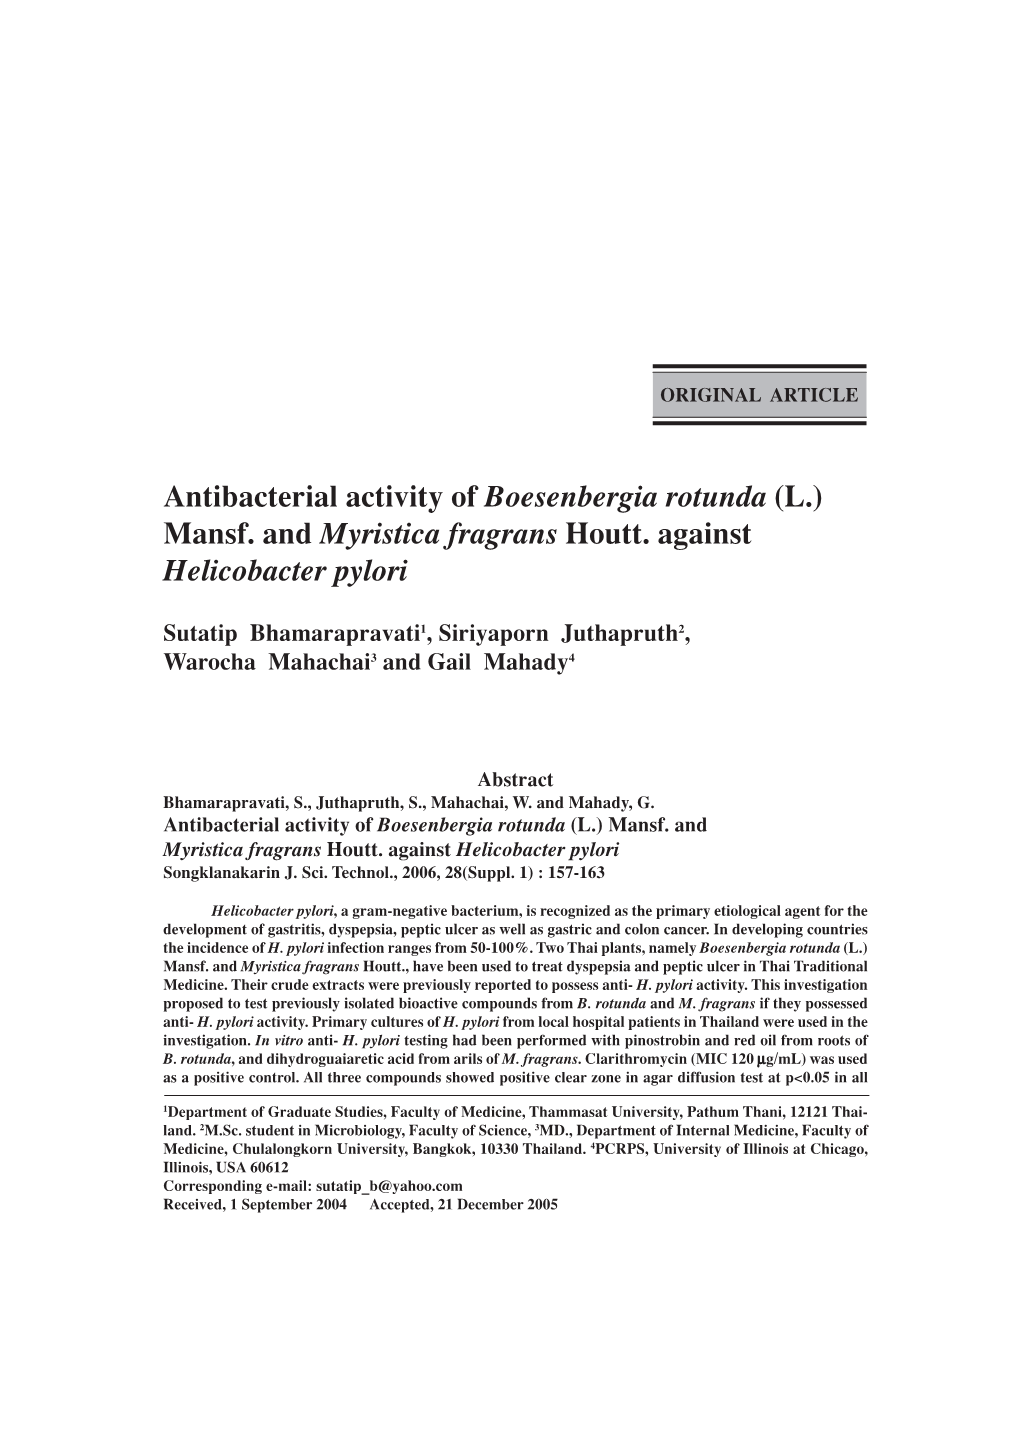 Antibacterial Activity of Boesenbergia Rotunda (L.) Mansf. and Myristica Fragrans Houtt